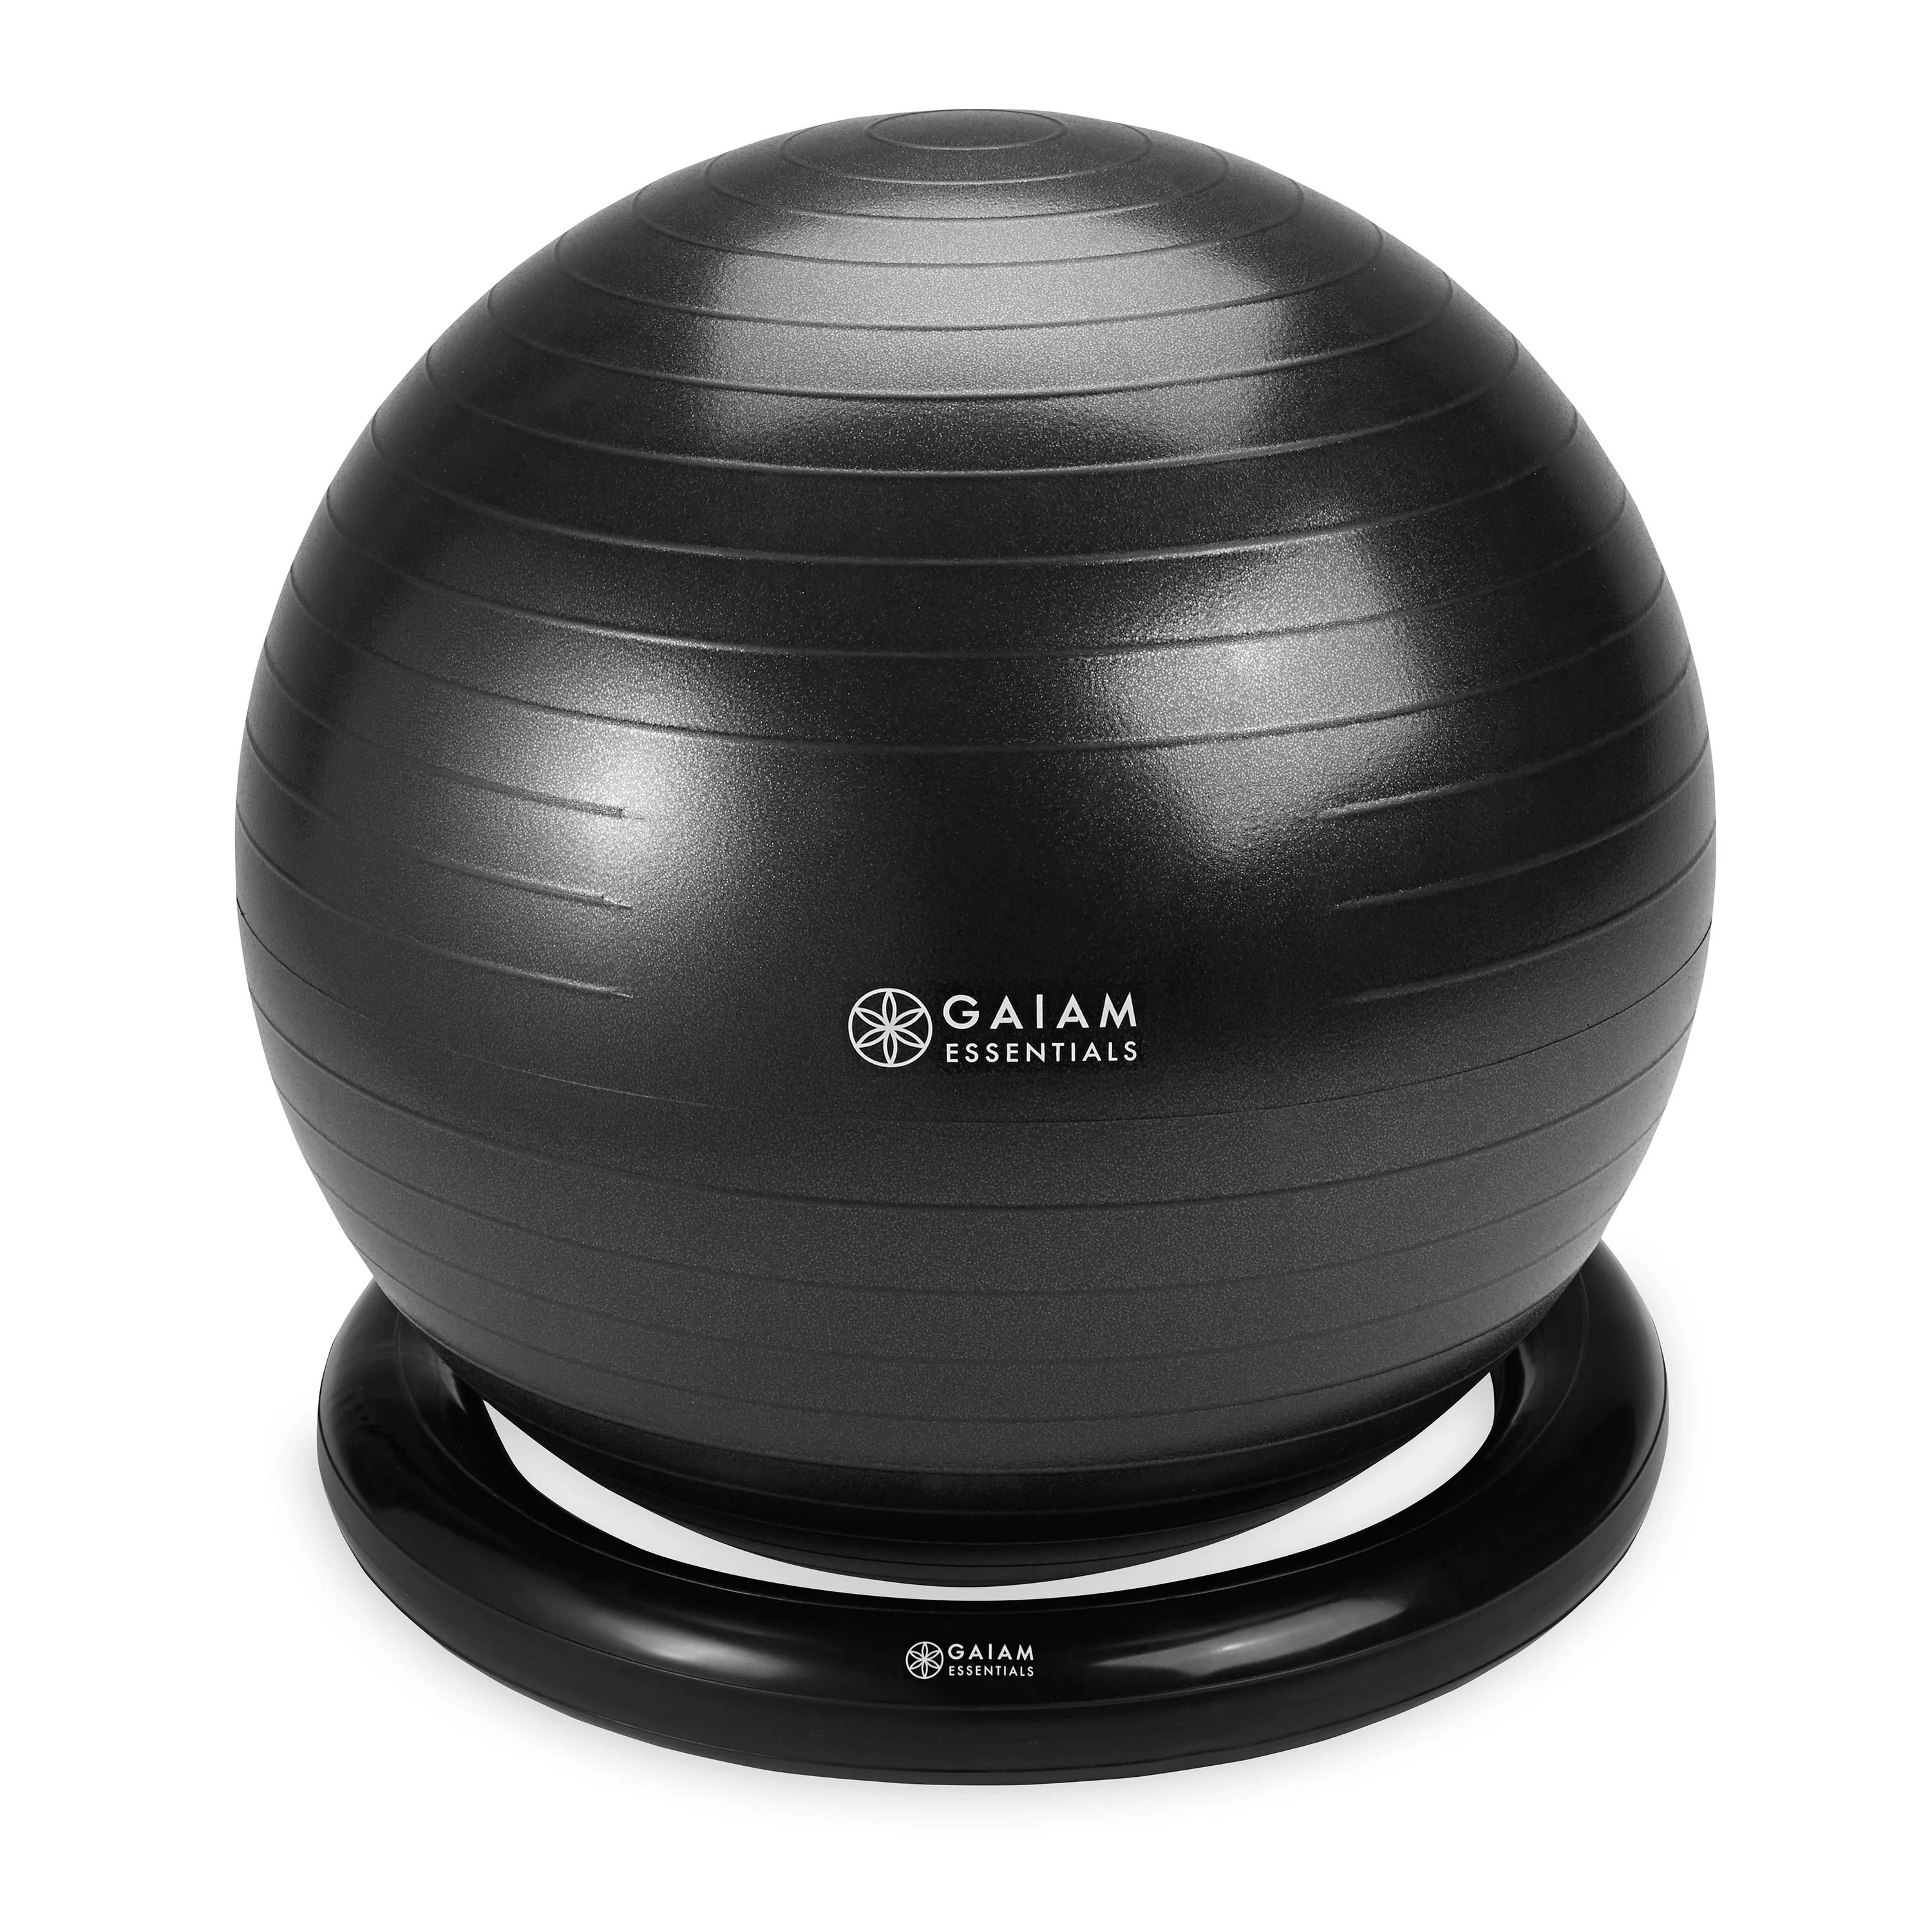 Gaiam Essentials Balance Ball & Base Kit Black ball on base